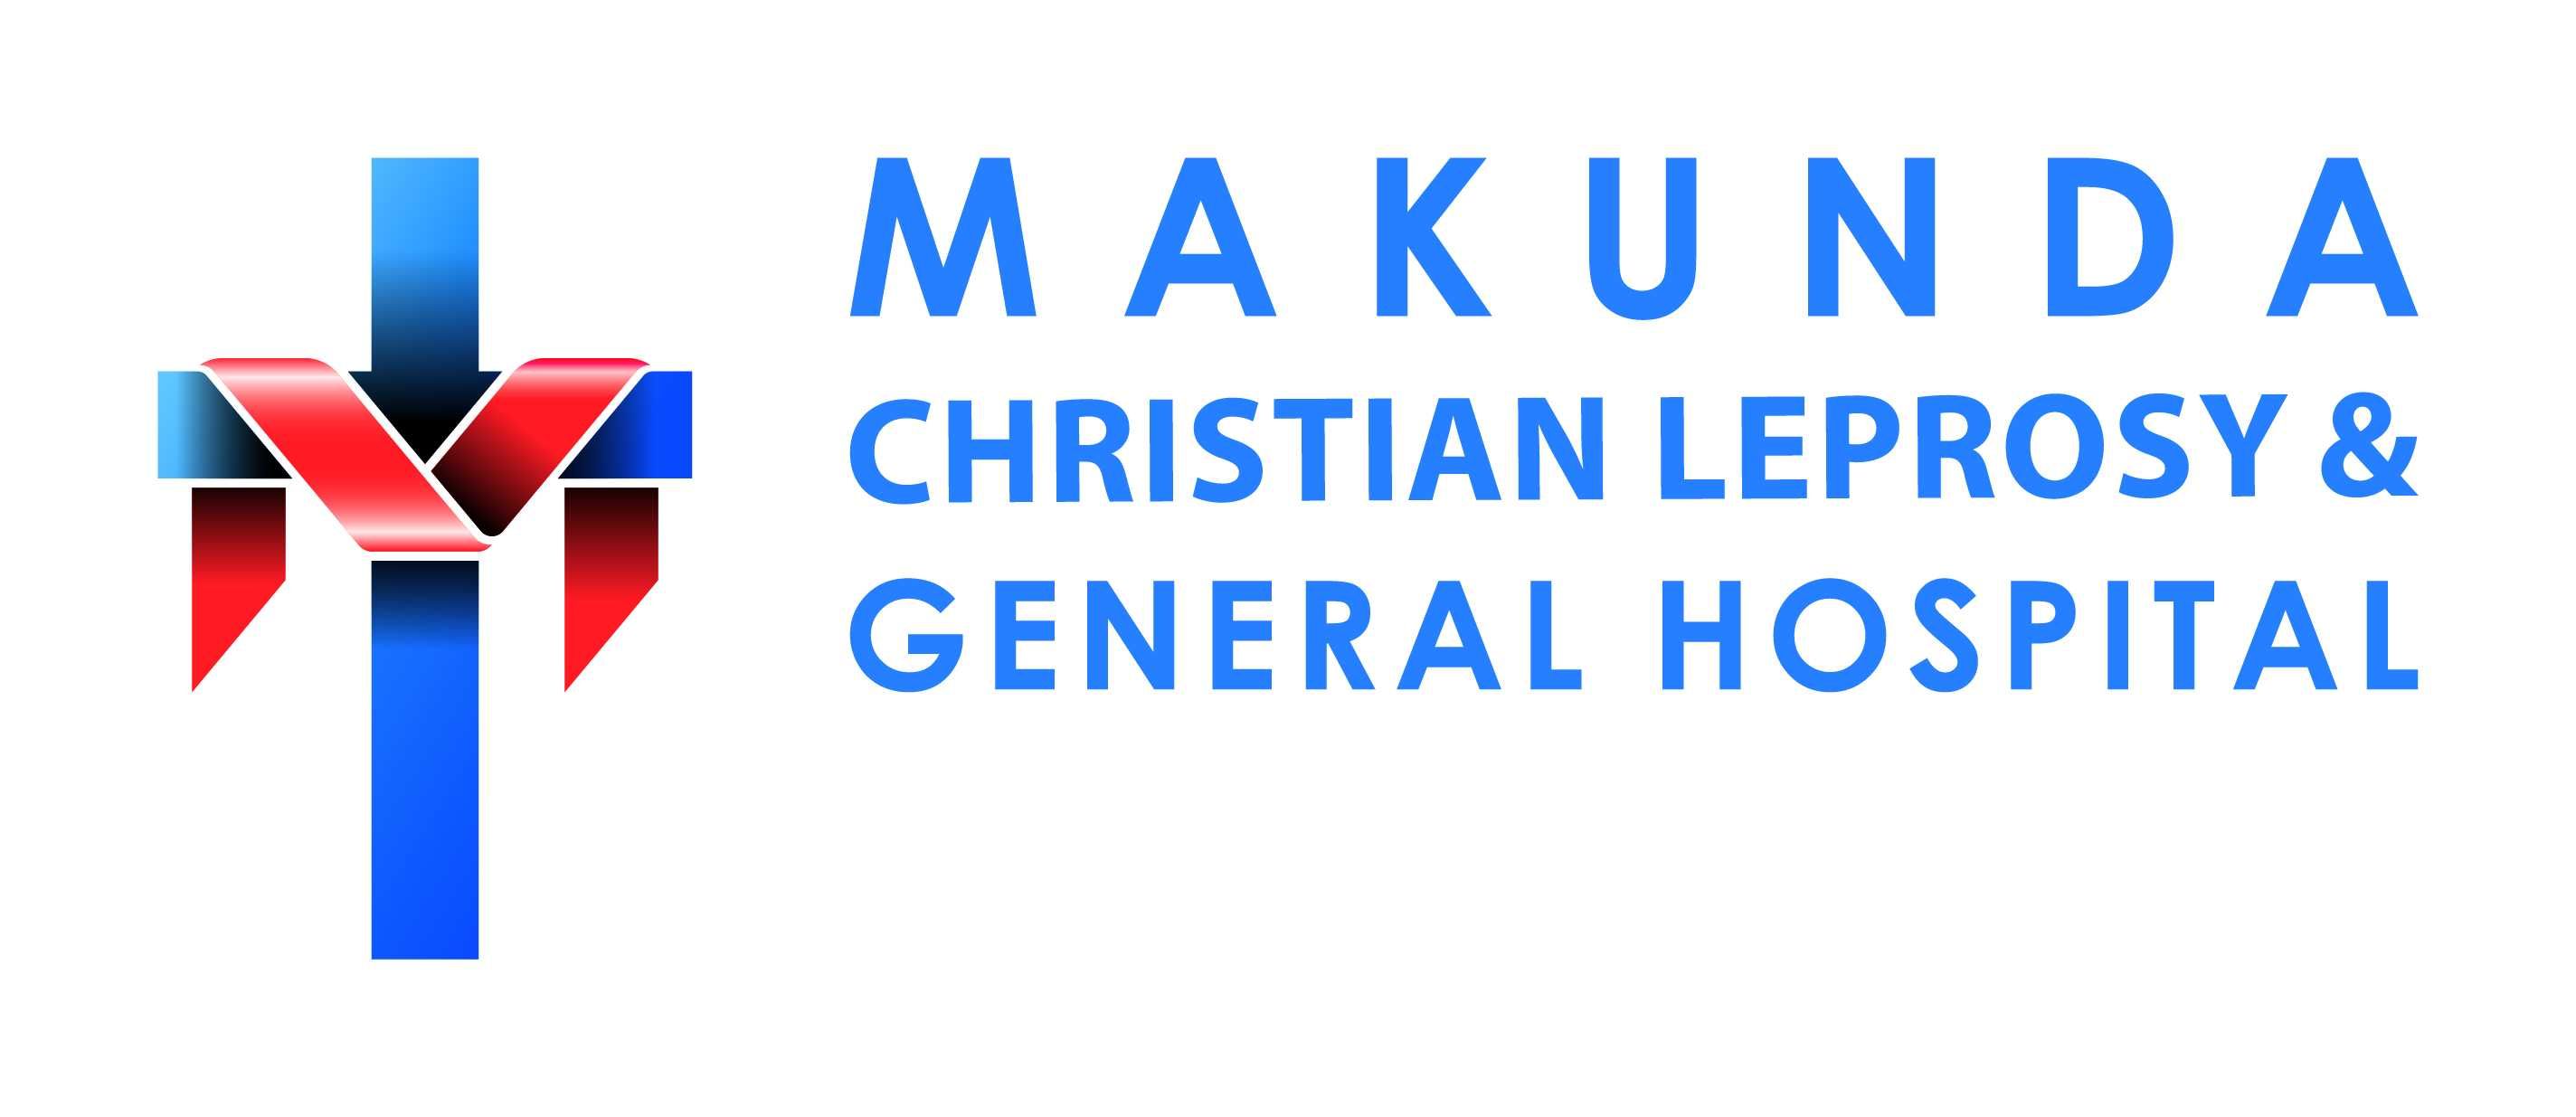 MAKUNDA CHRISTIAN LEPROSY AND GENERAL HOSPITAL